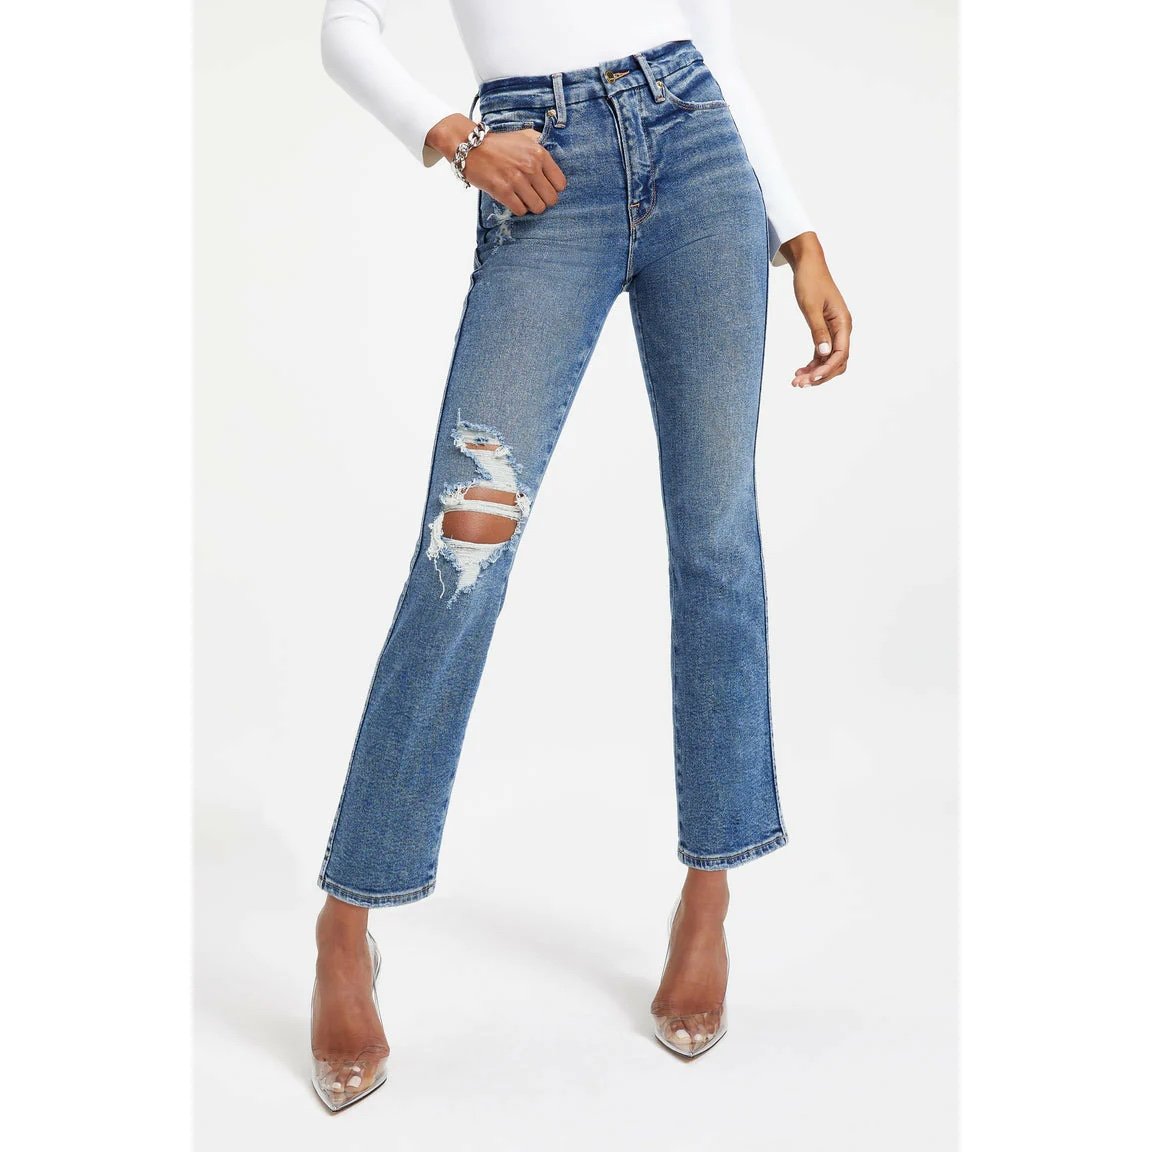 Popular Good American Good Curve High Waist Distressed Straight Leg Jeans Size 26 oxtEgv0dG on sale